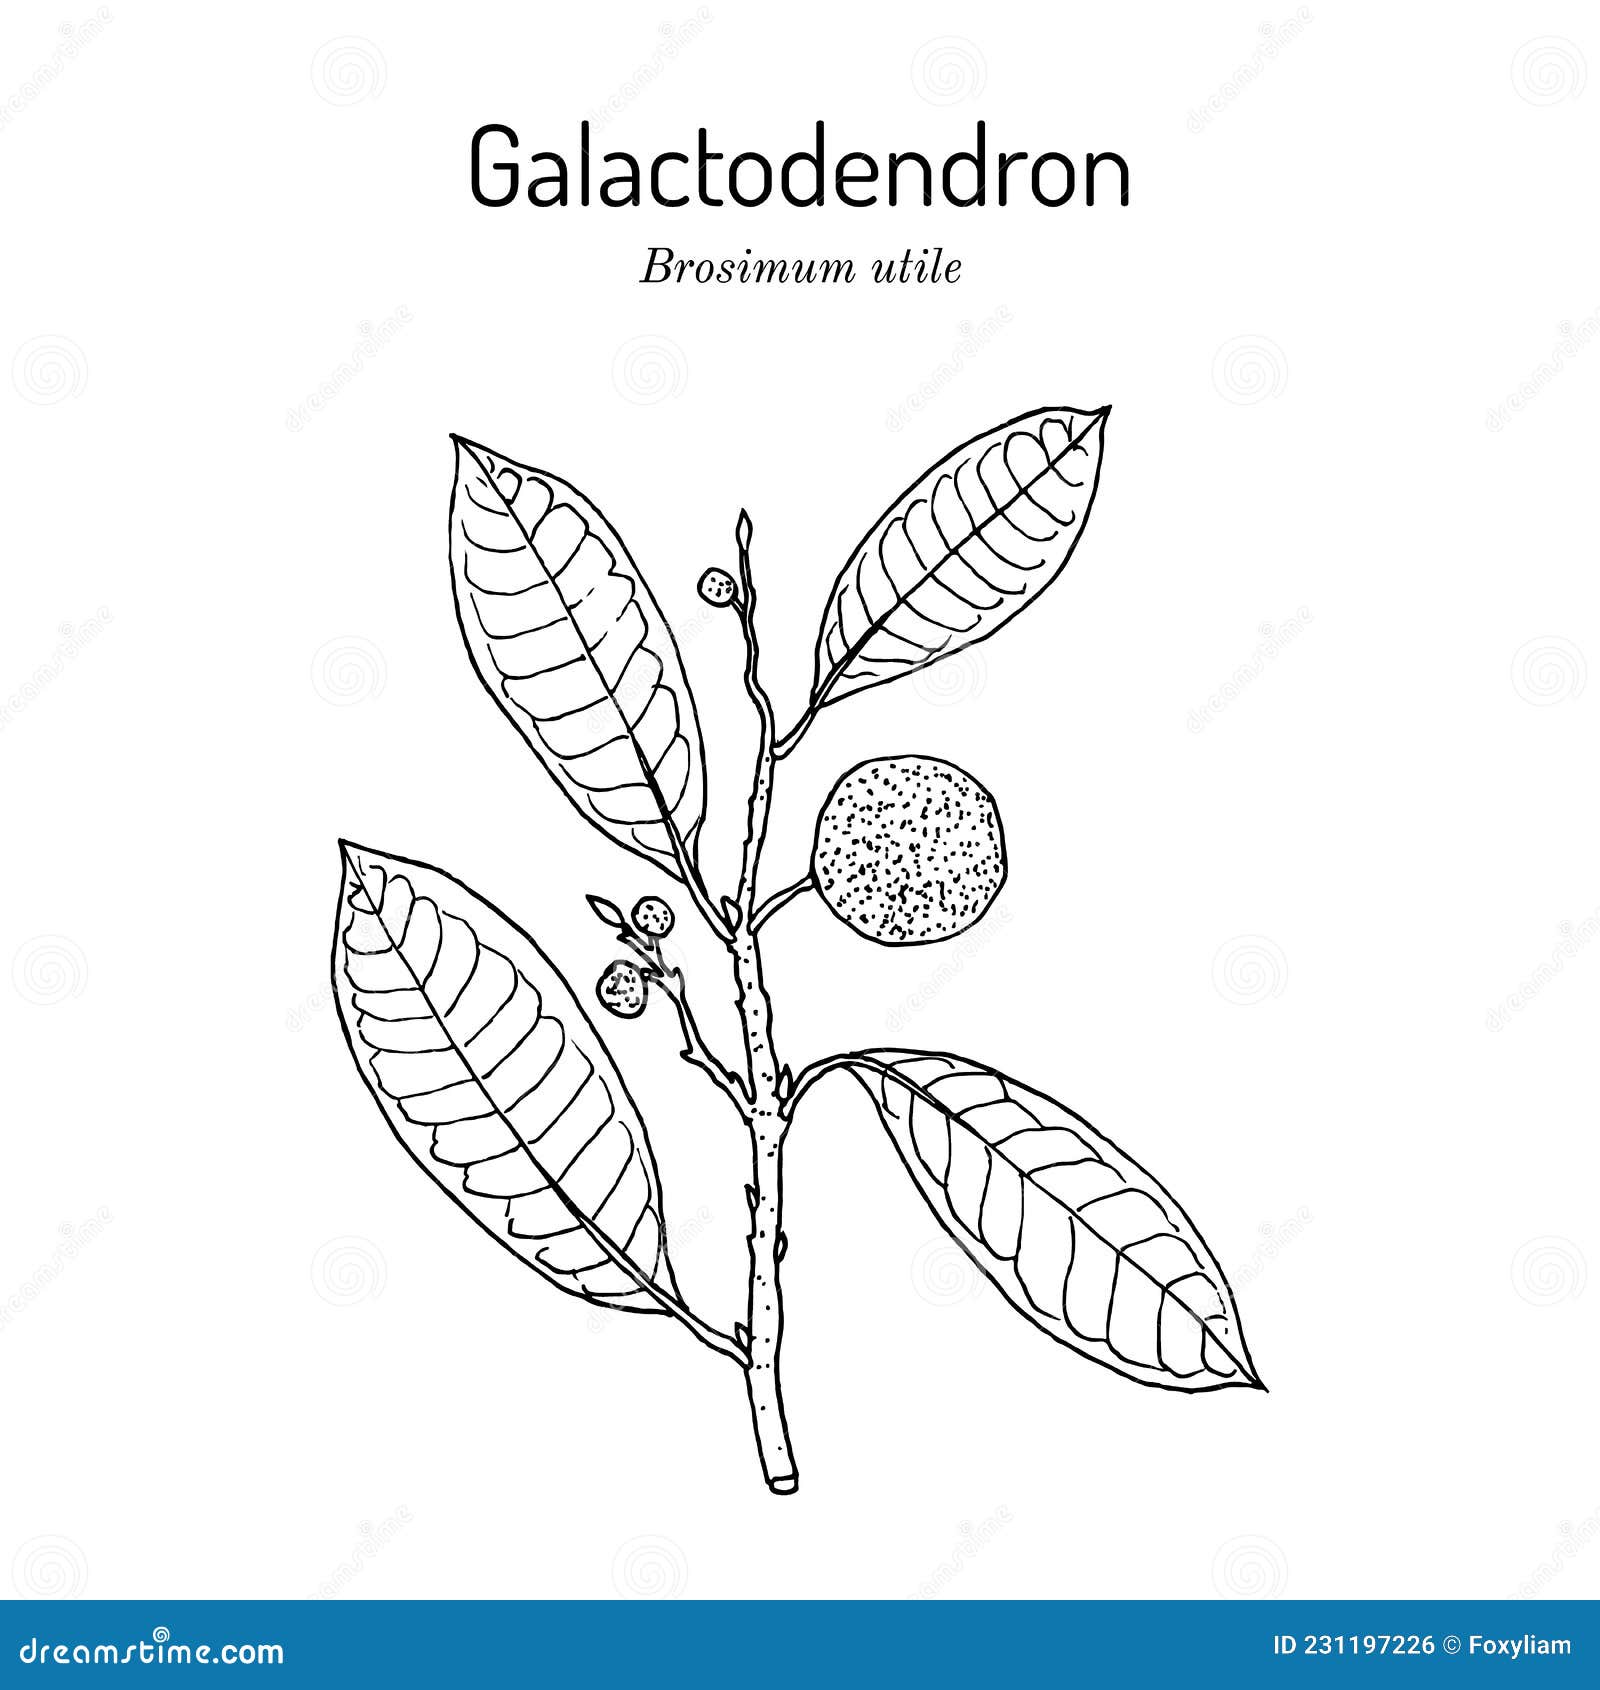 galactodendron brosimum utile , medicinal plant